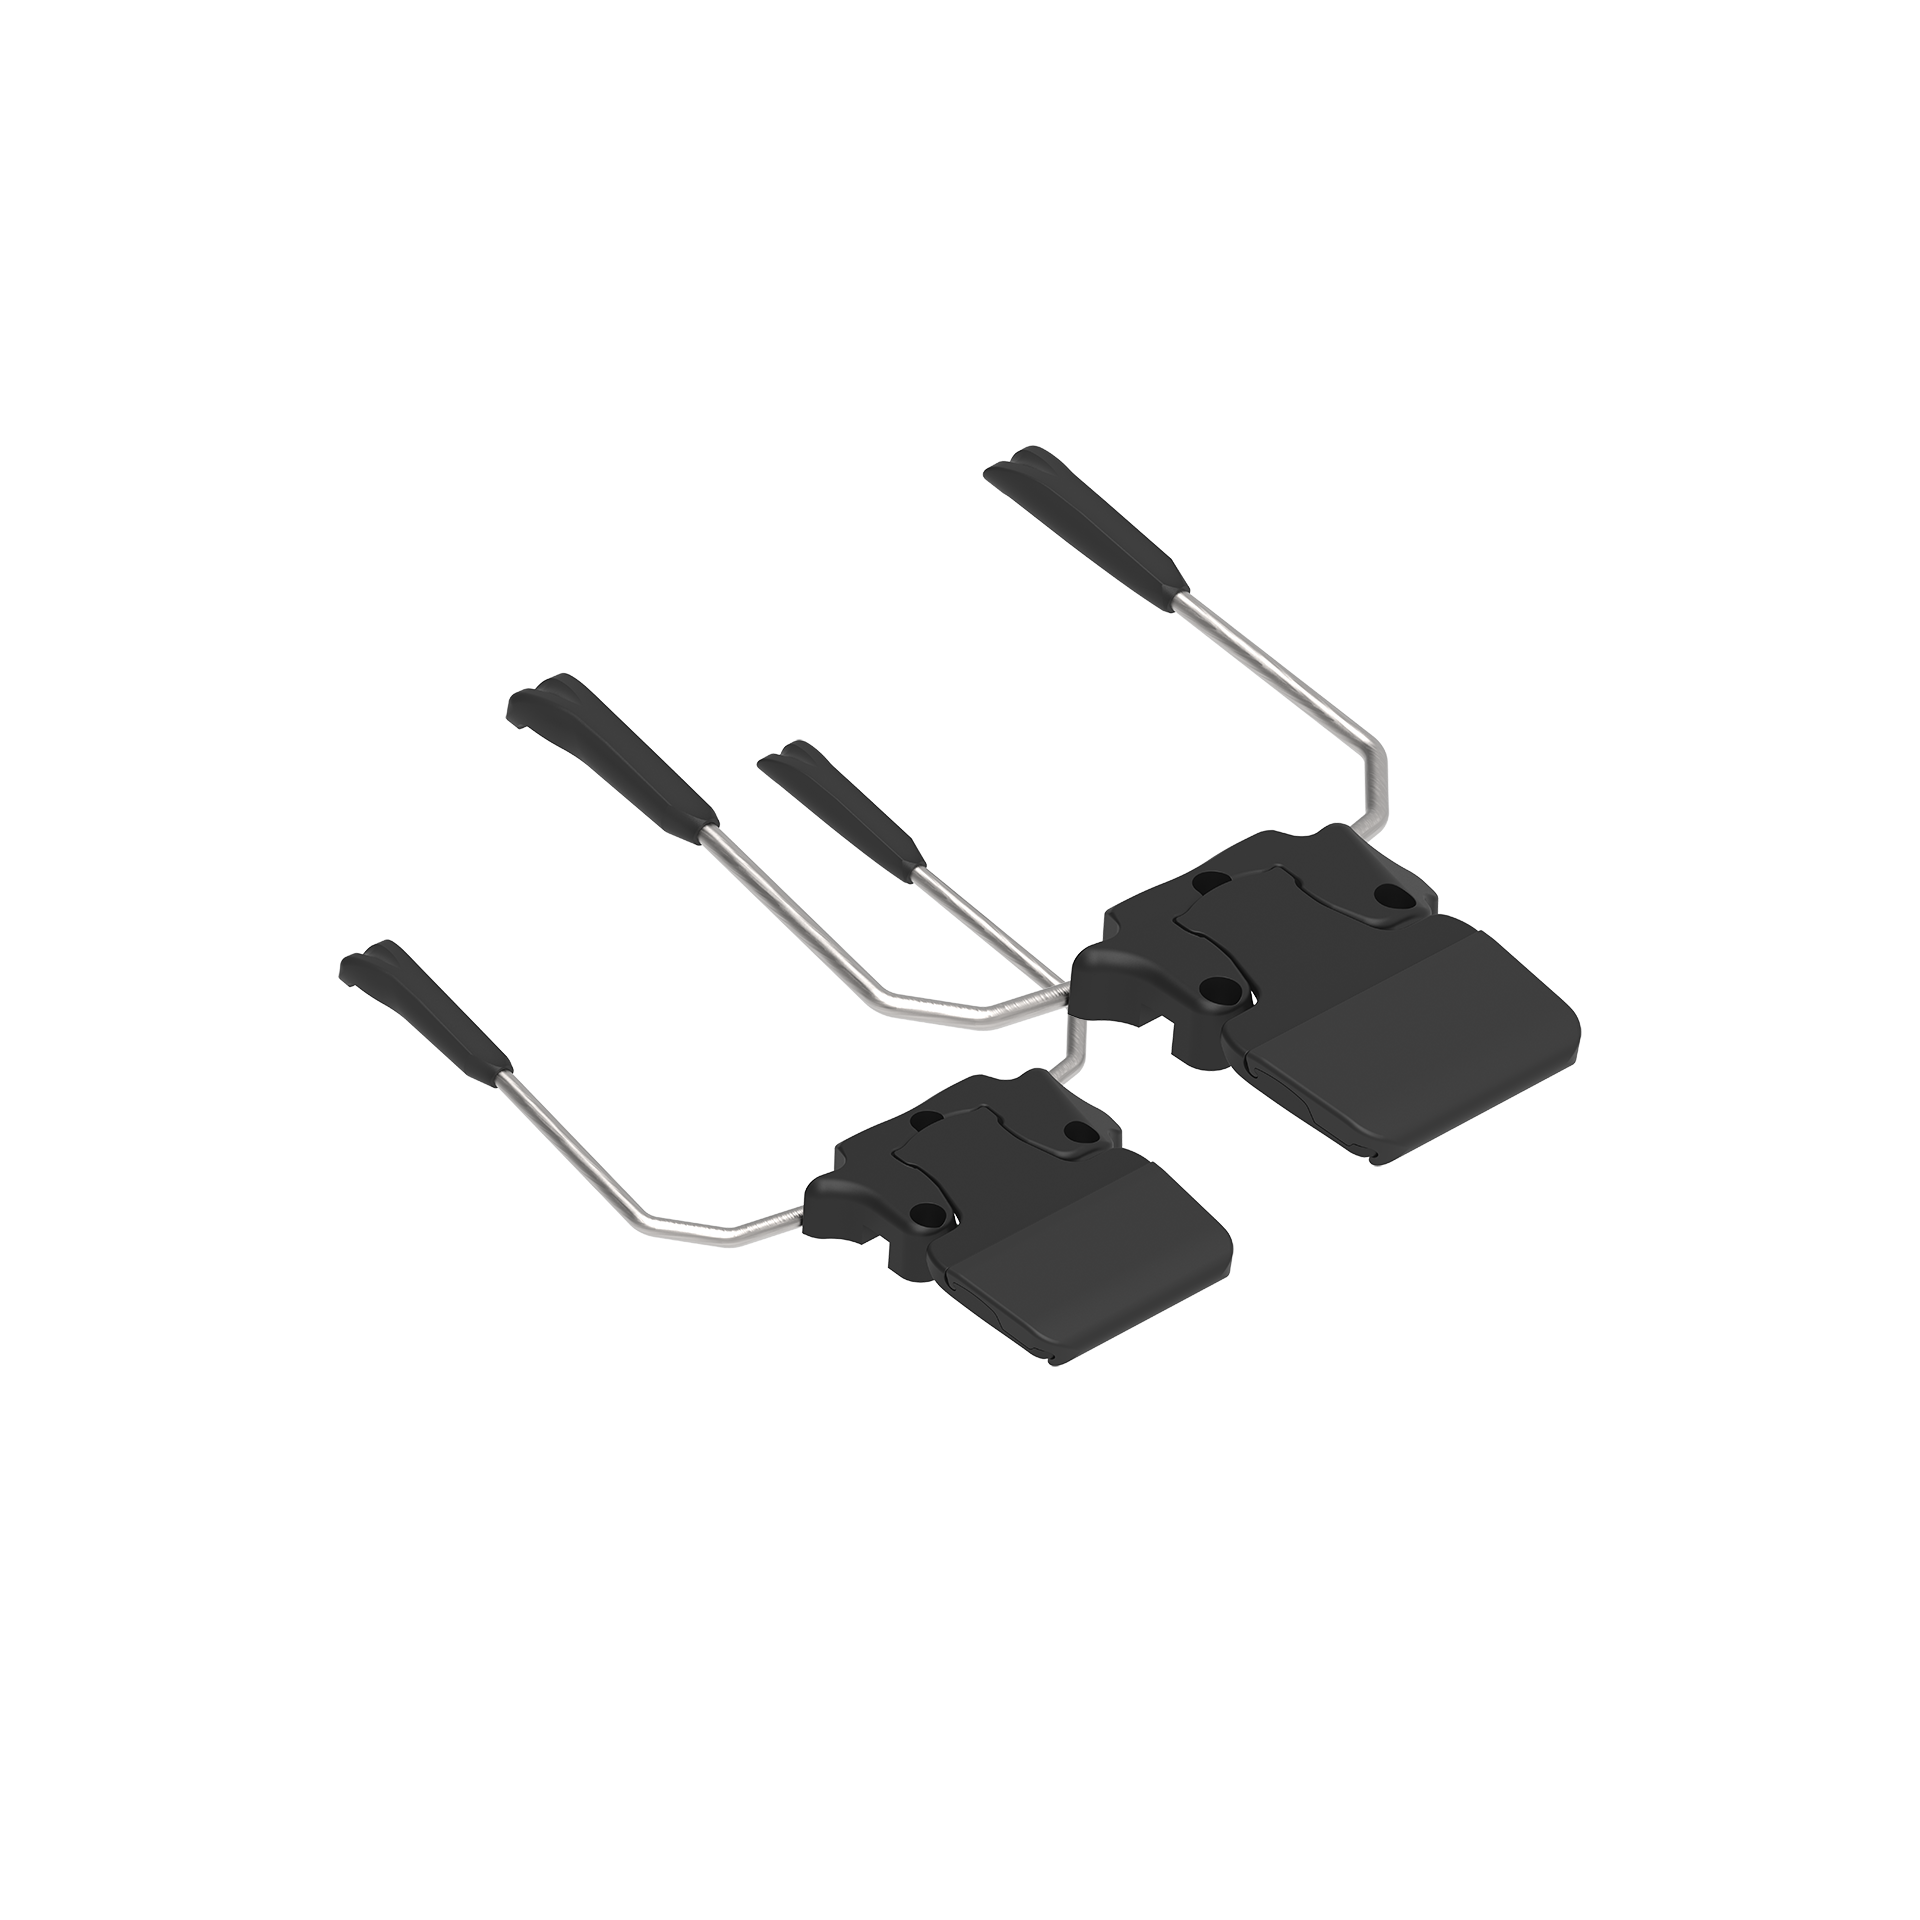 Rear ski brakes for ATK Raider and Hagan Core 12 Pro, Boost 12 and Pure 10 bindings